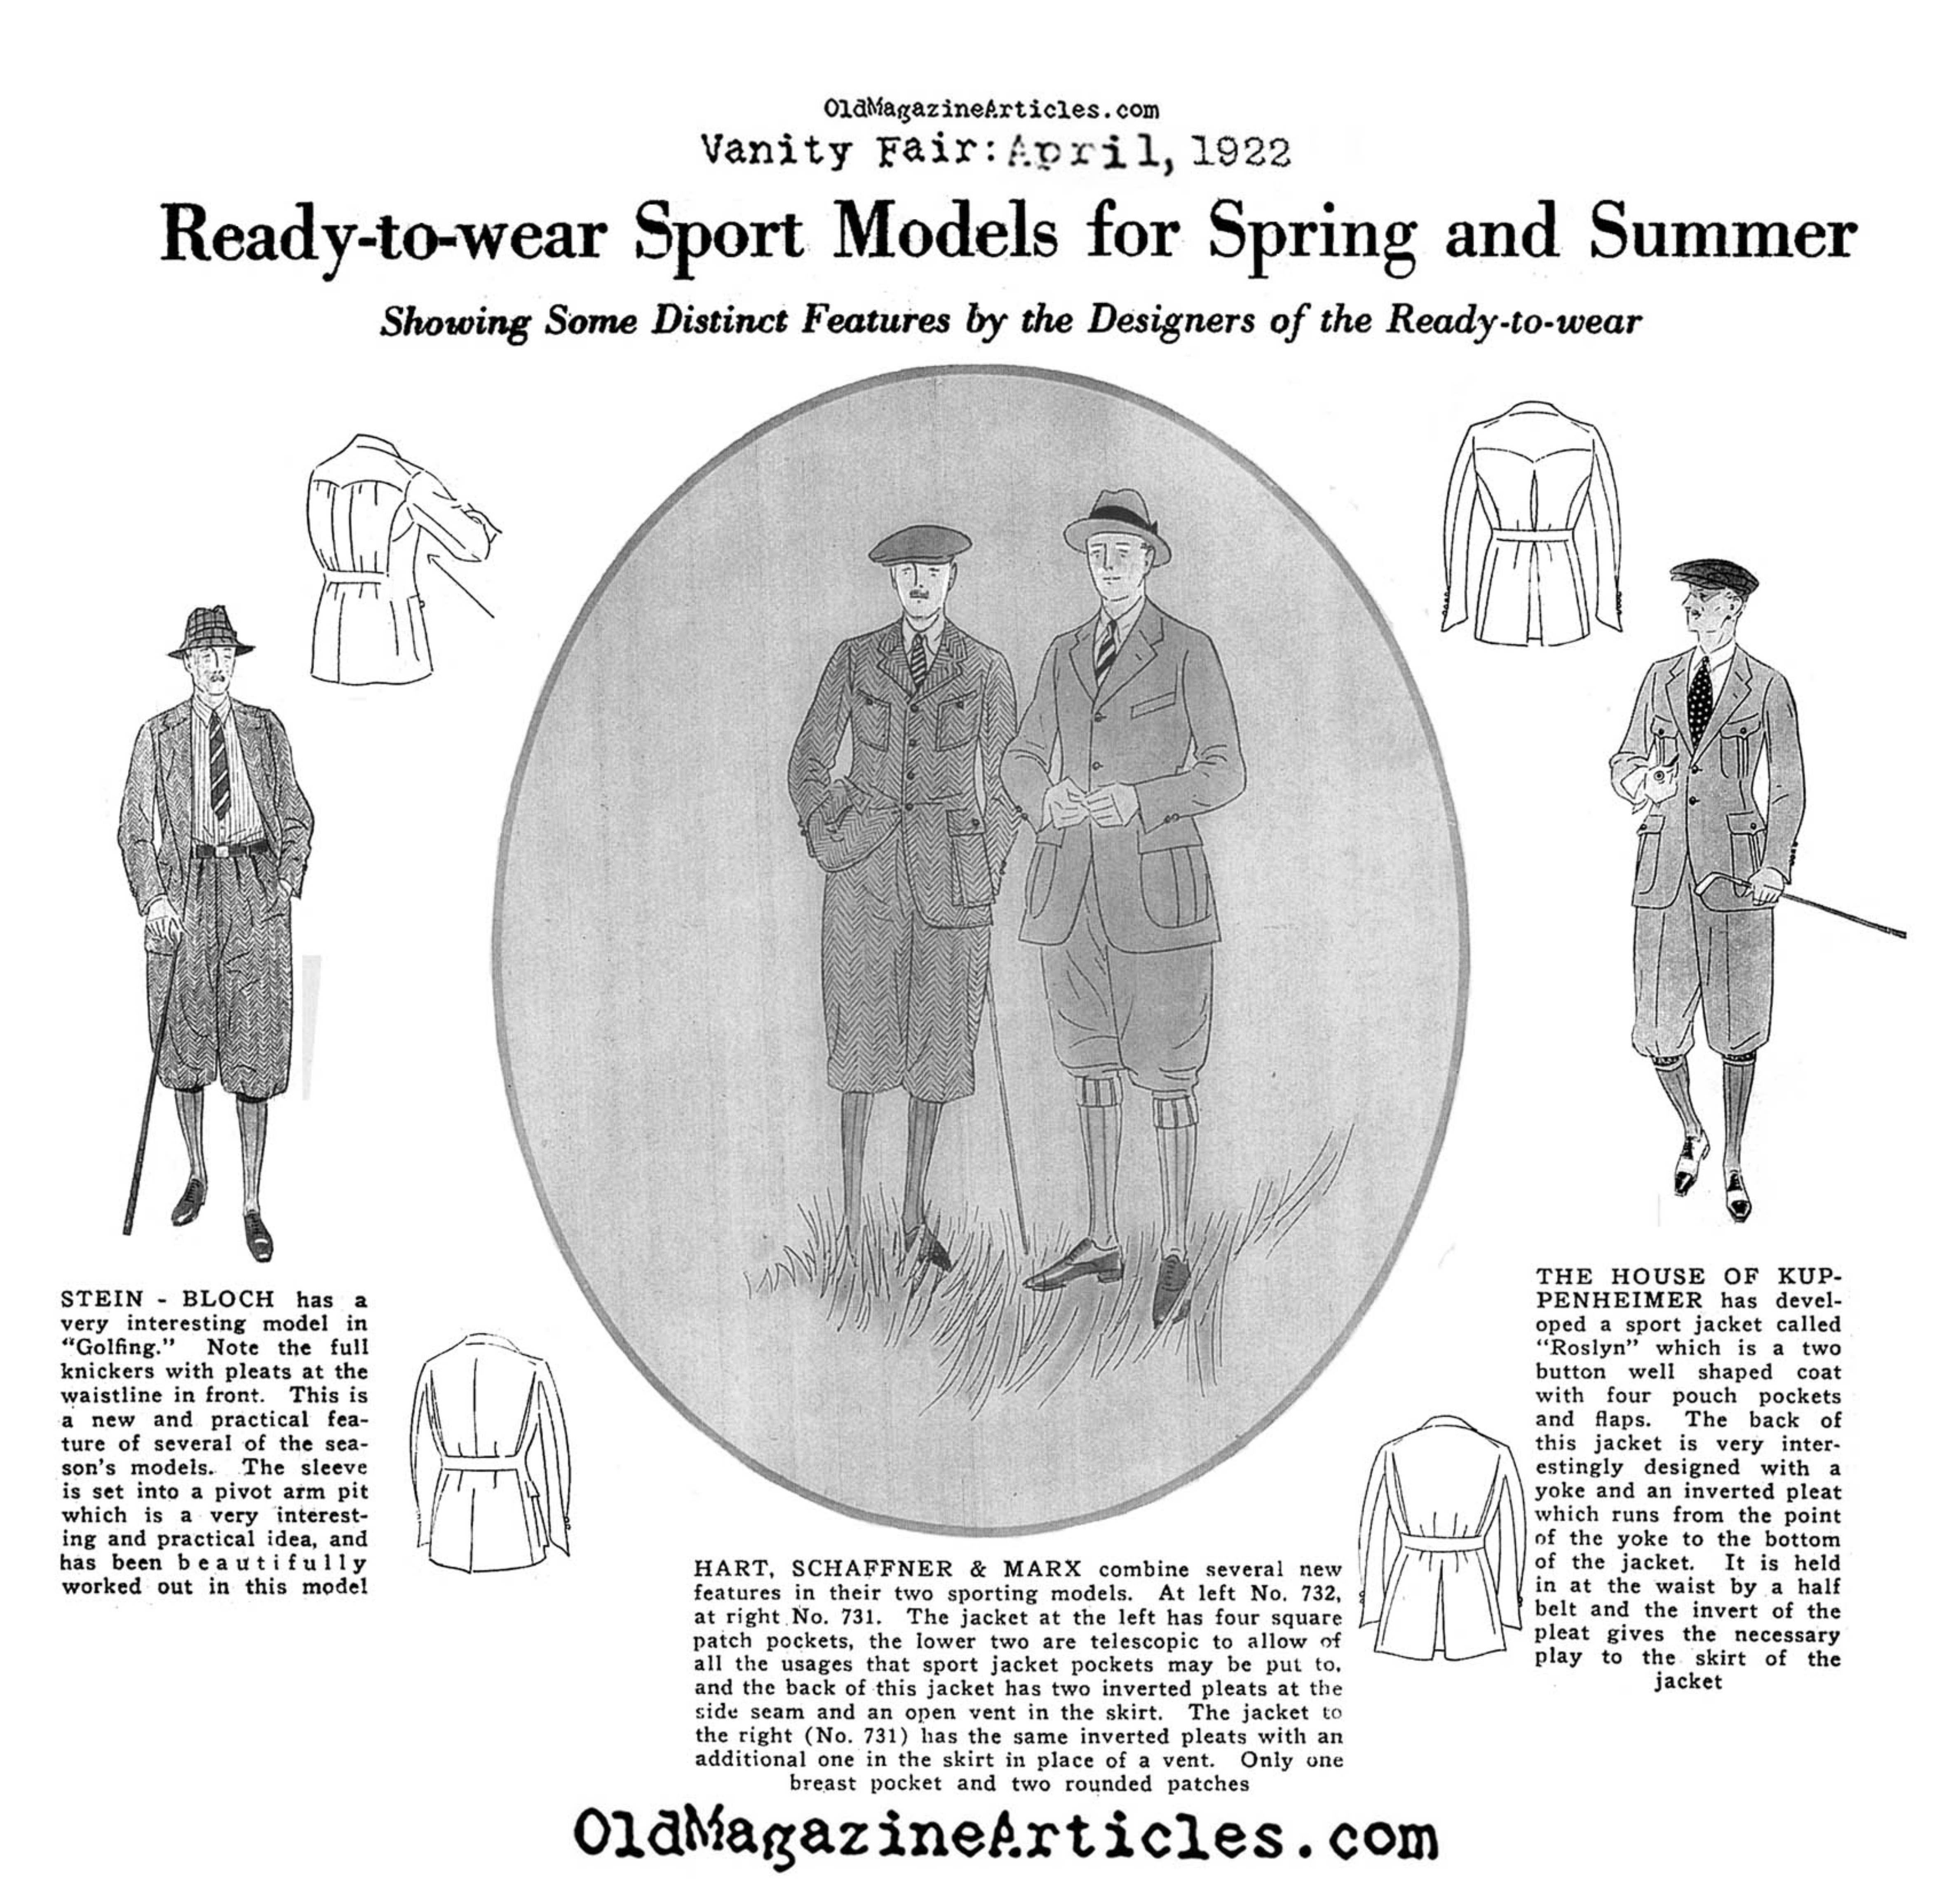 Men's Golf Suits of 1922  (Vanity Fair Magazine, 1922)